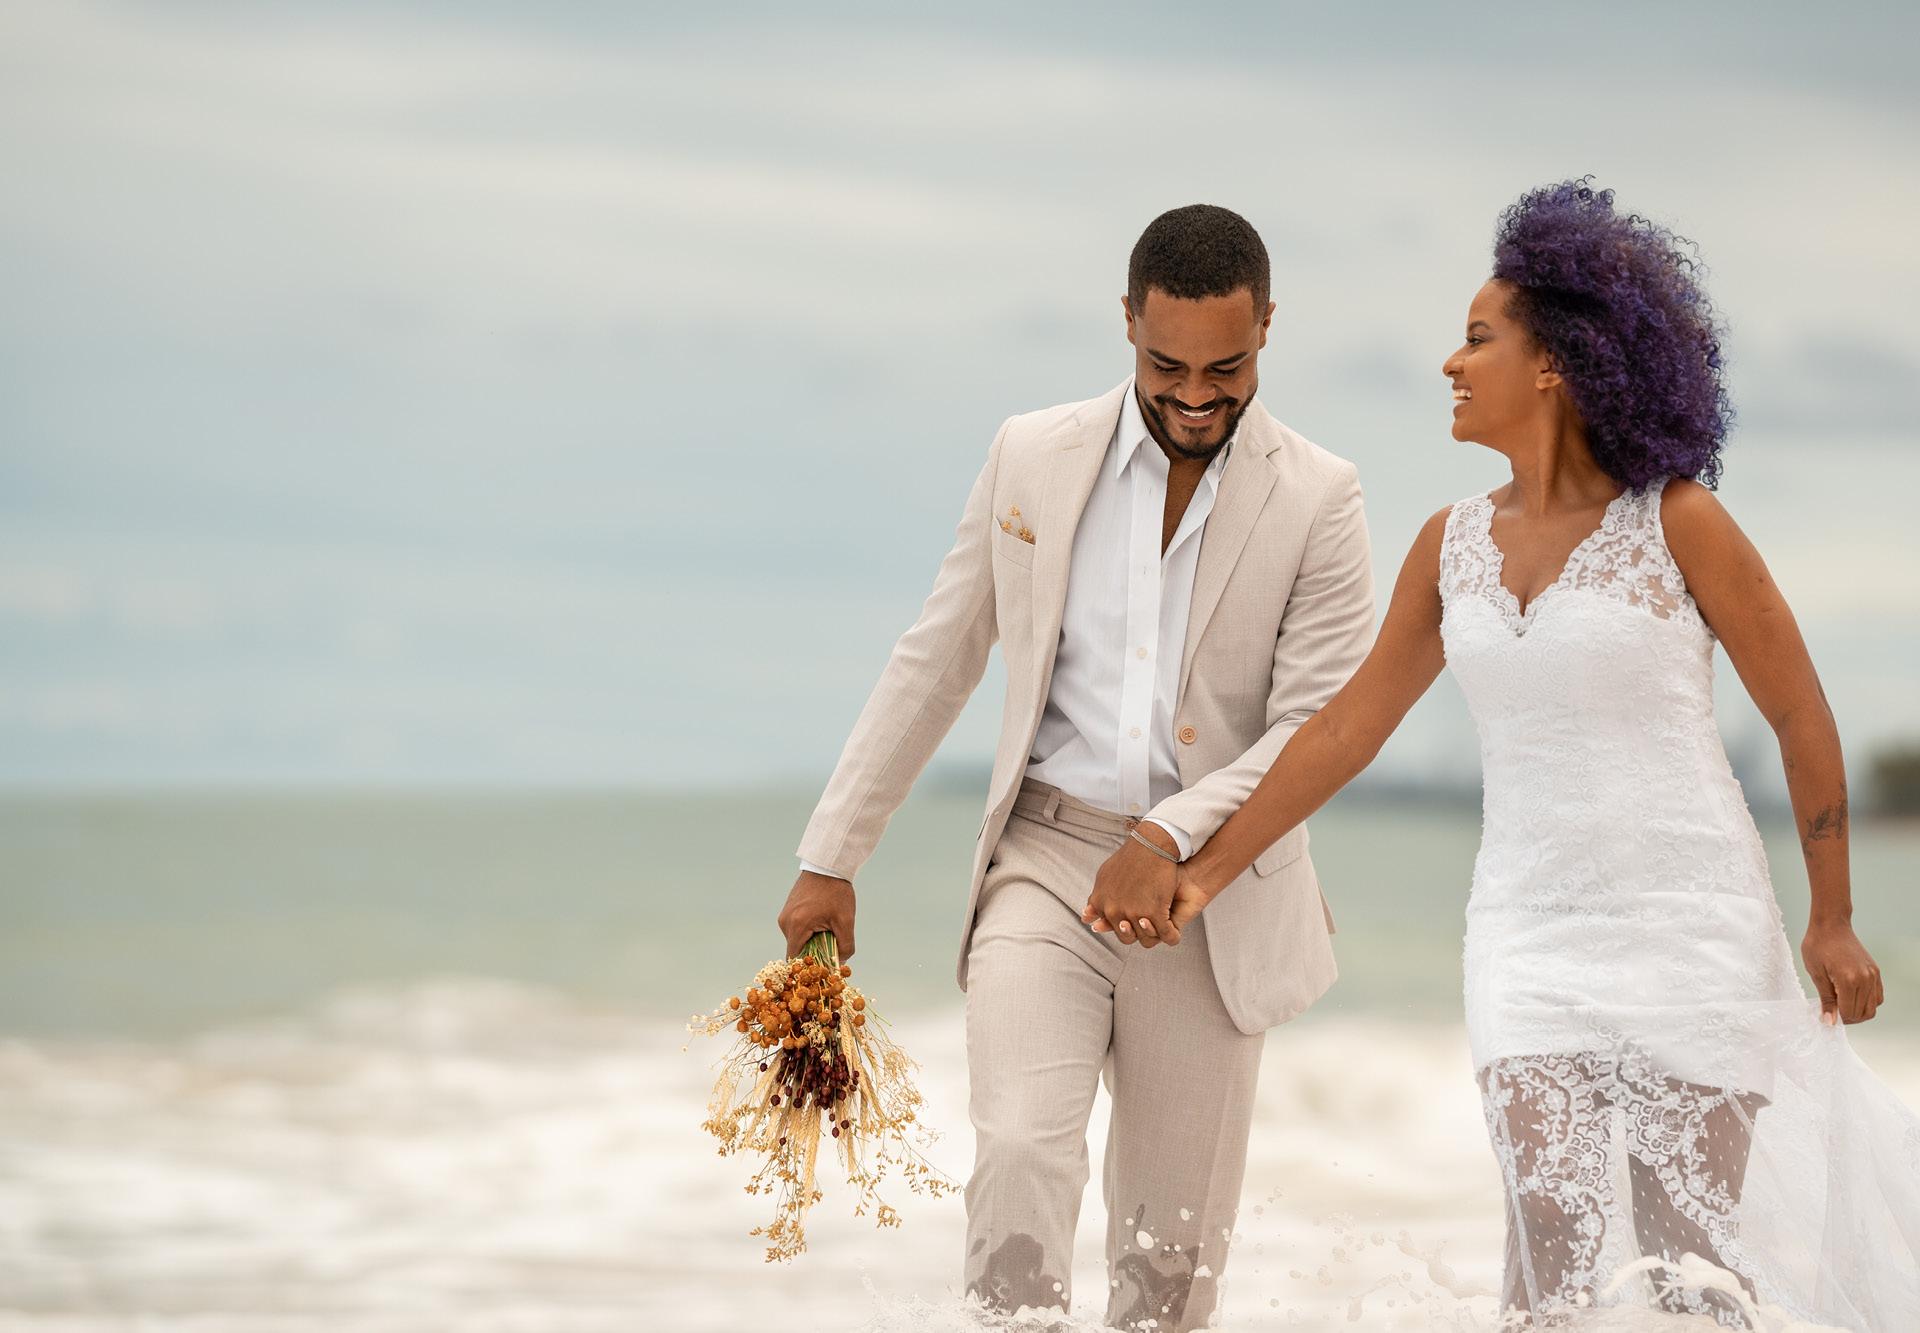 A couple walks along the beach after their destination wedding